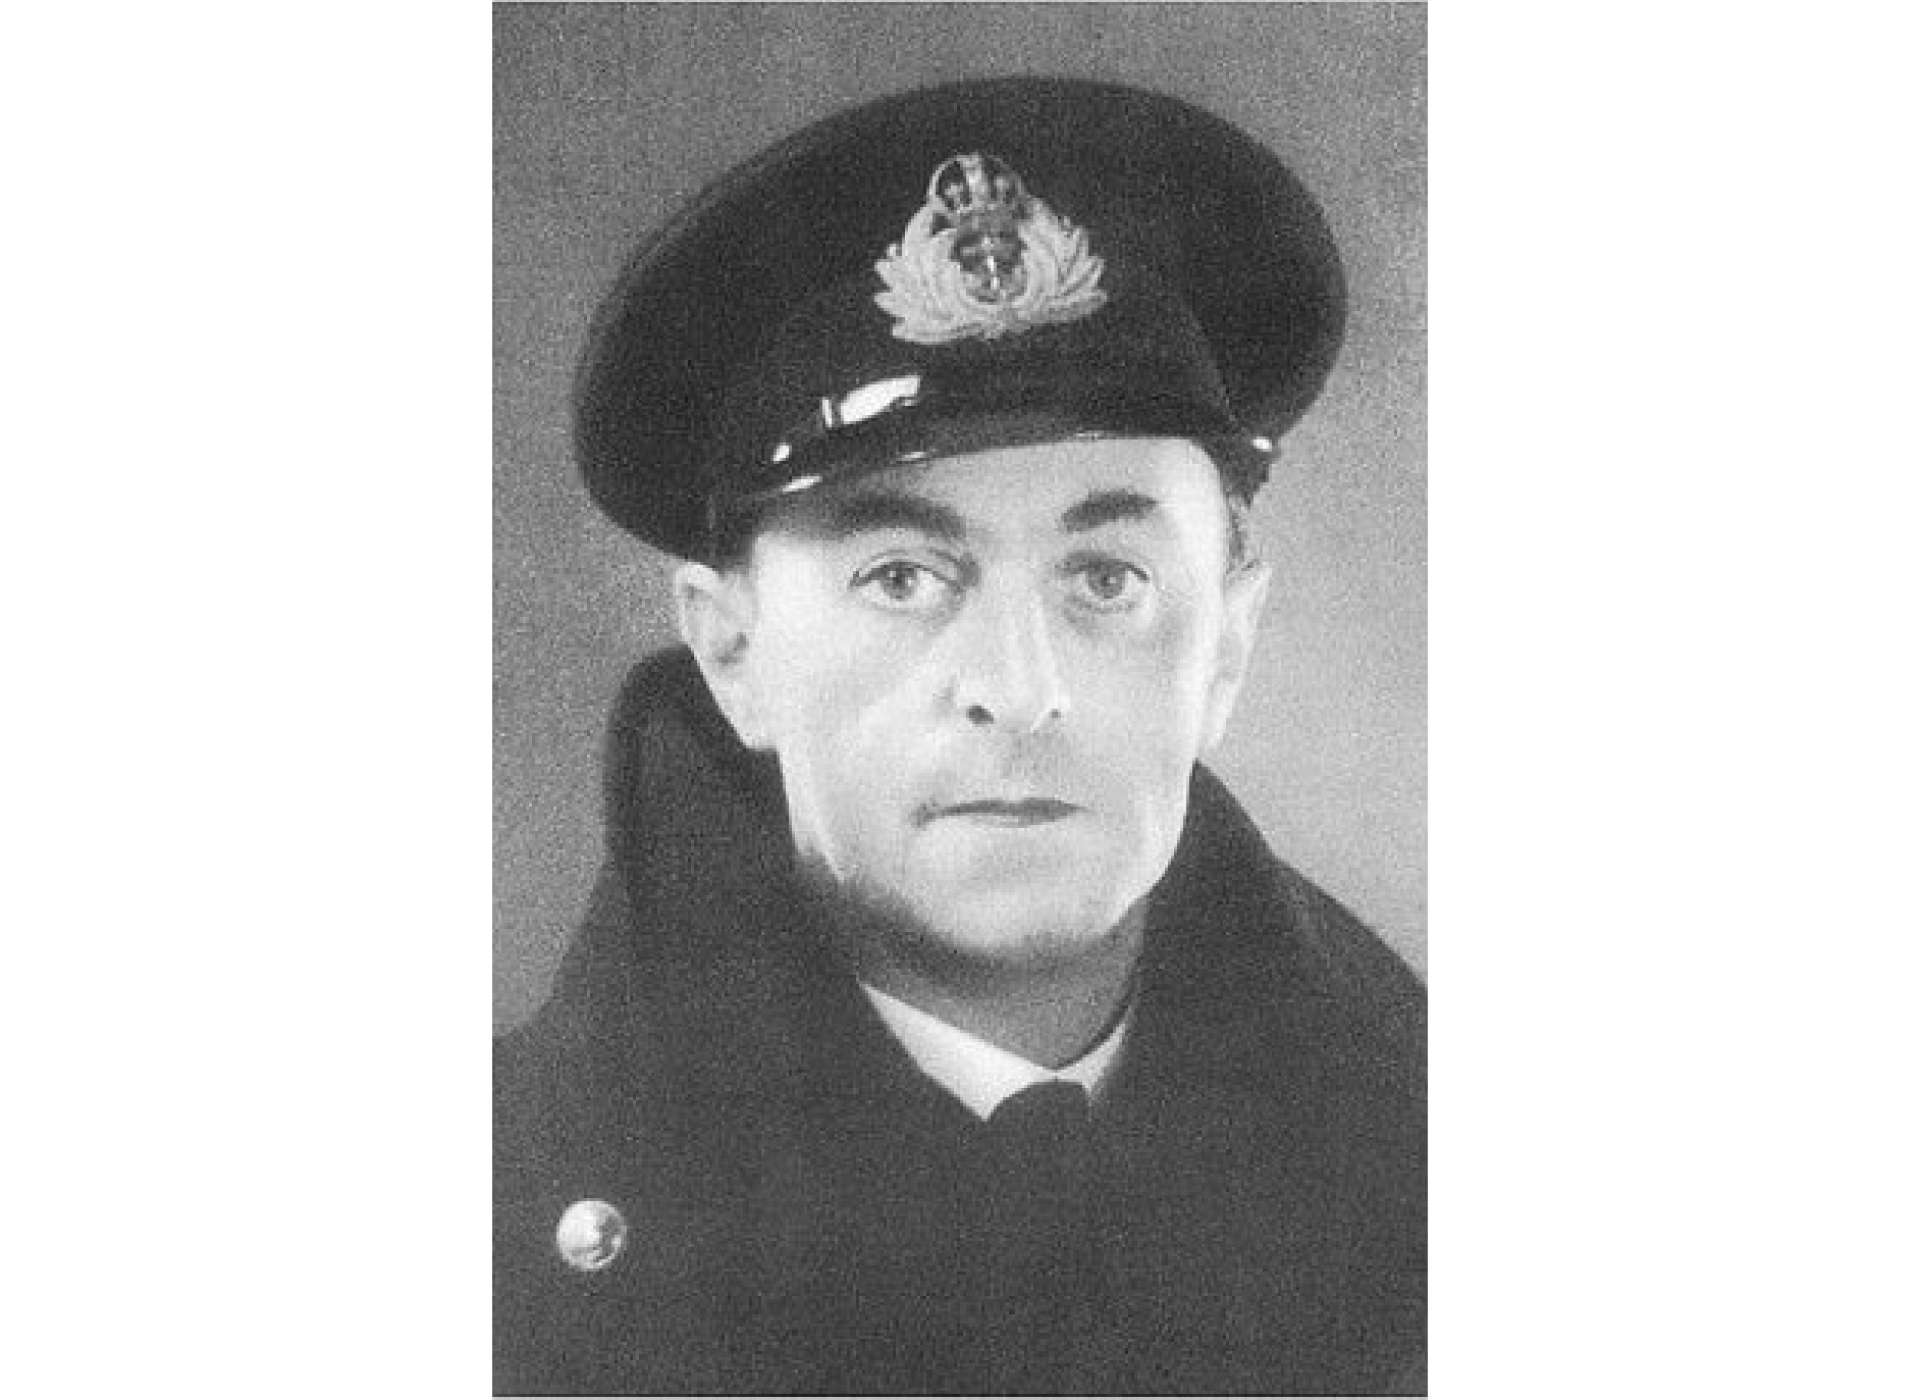 Lt. Commander Ewen Montagu, RNVR